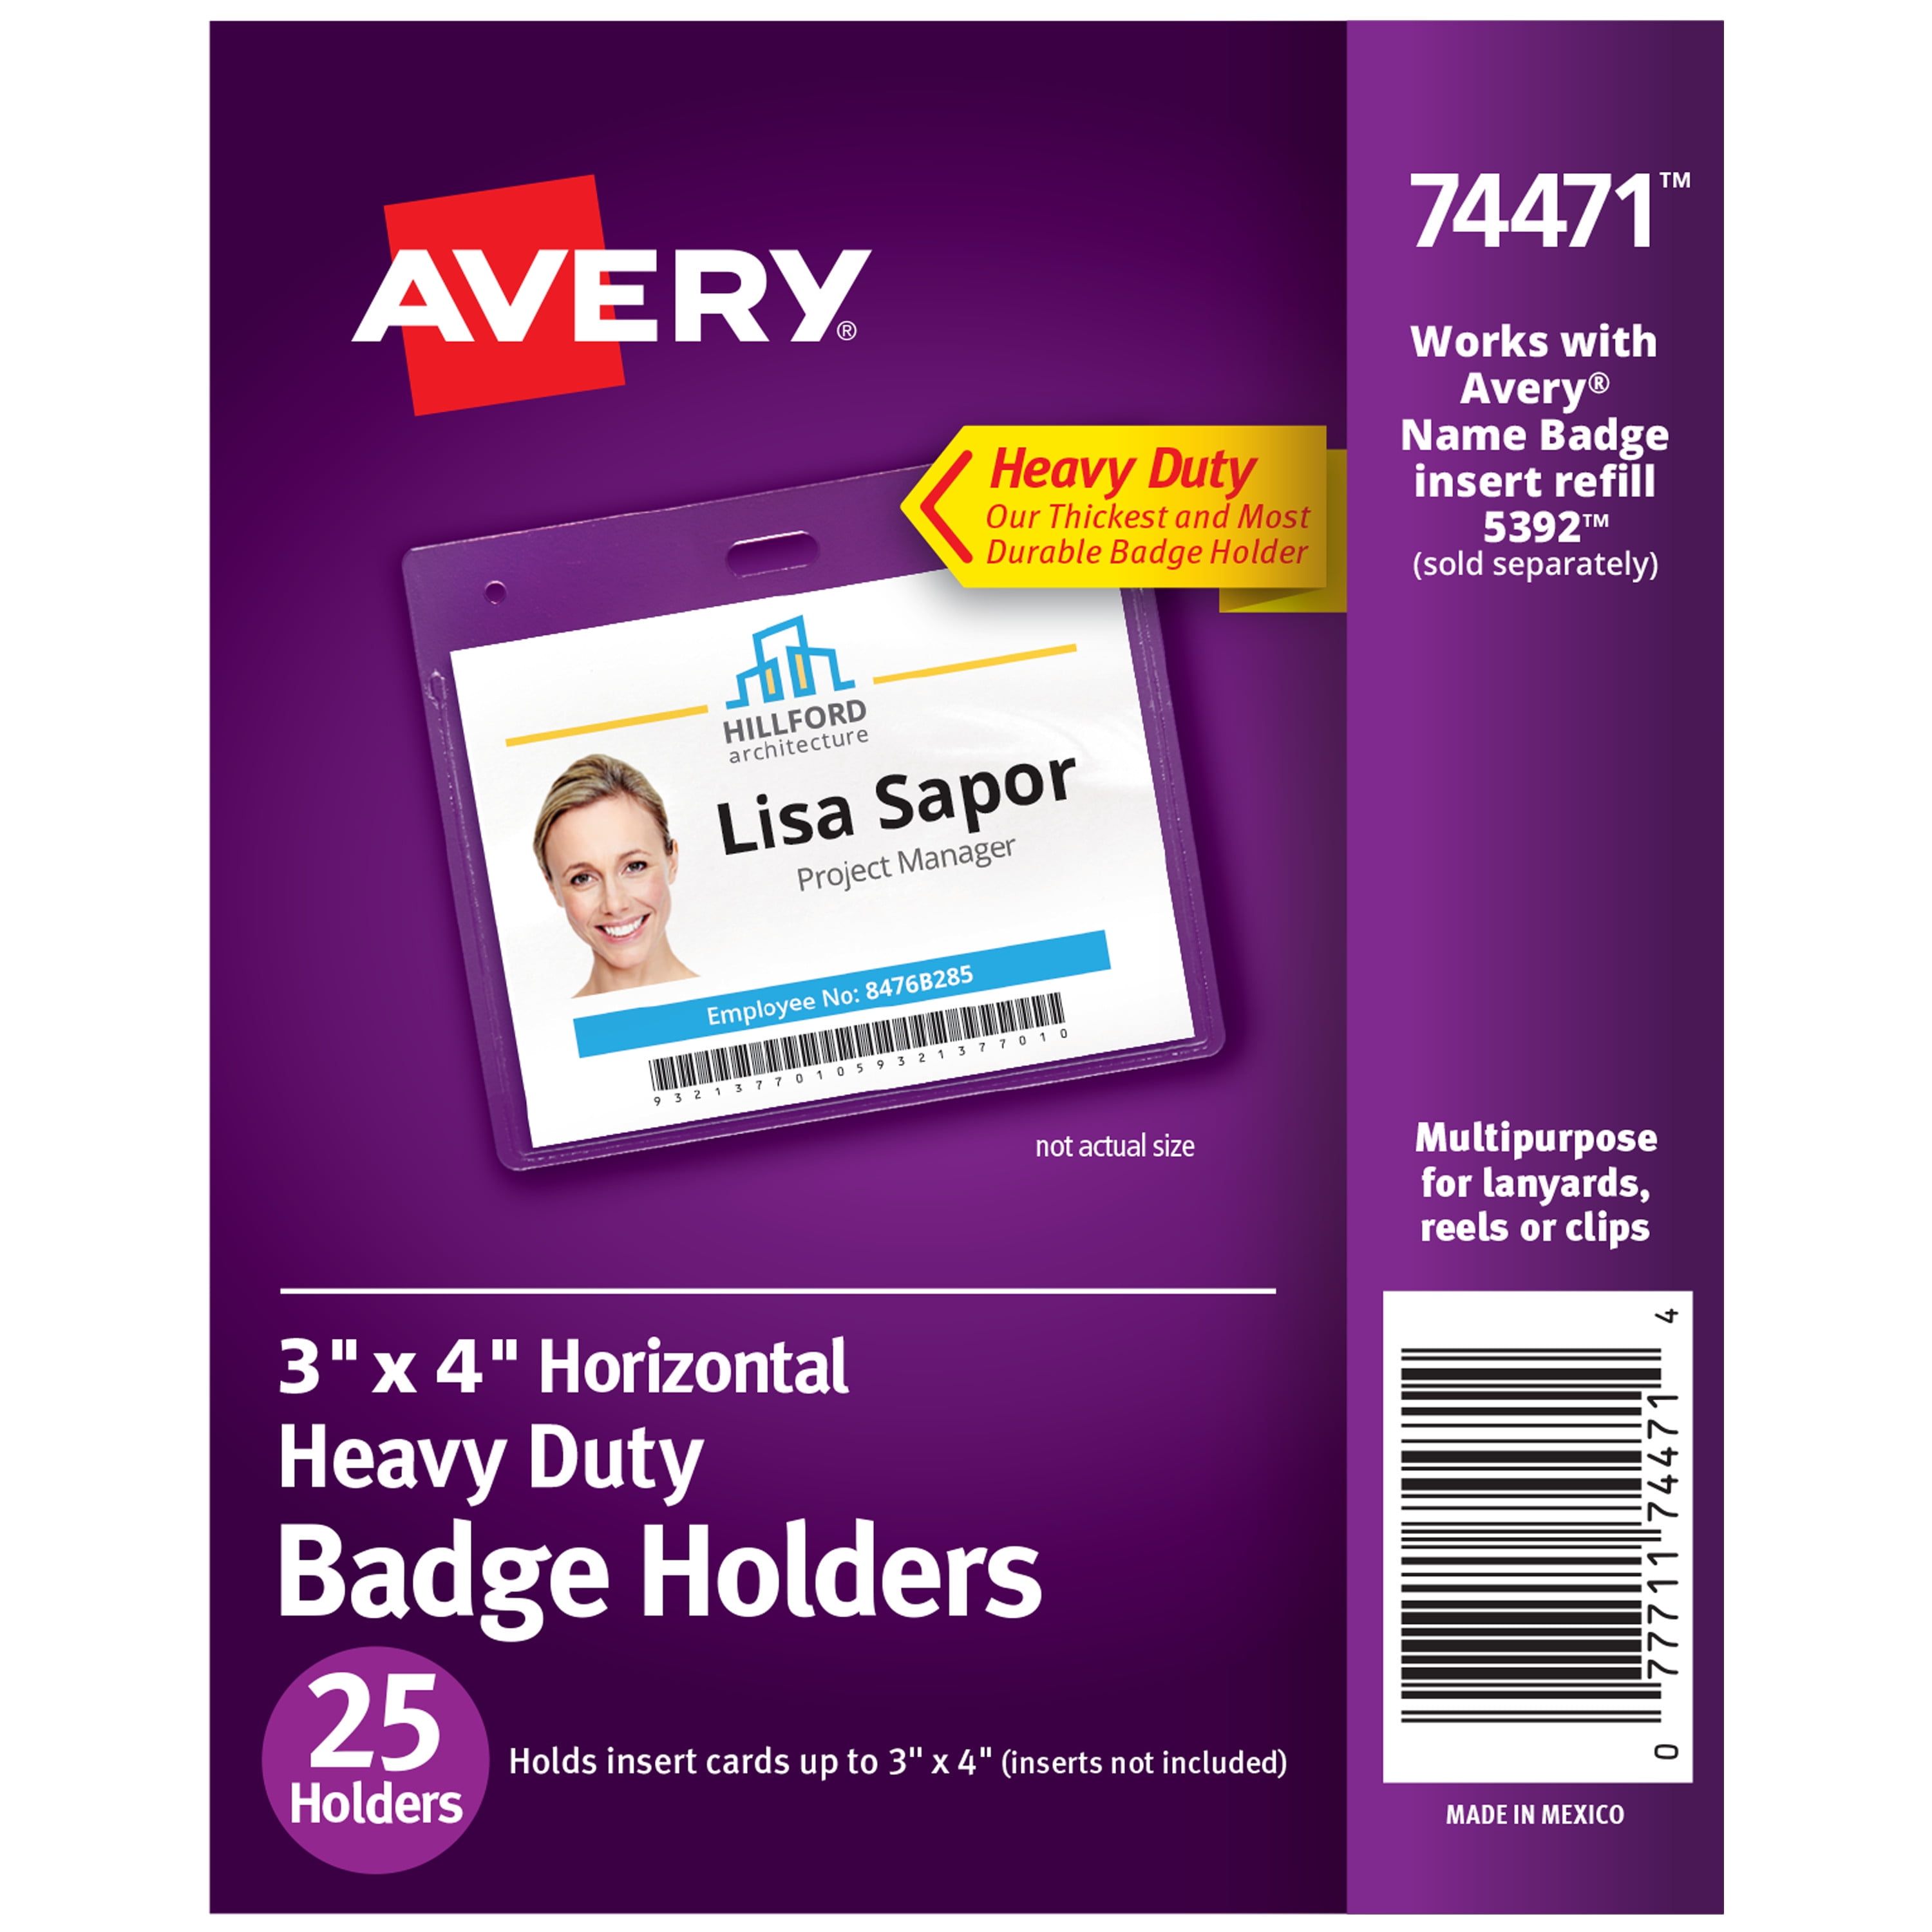 Avery Dennison 5392 Badge Label for sale online 